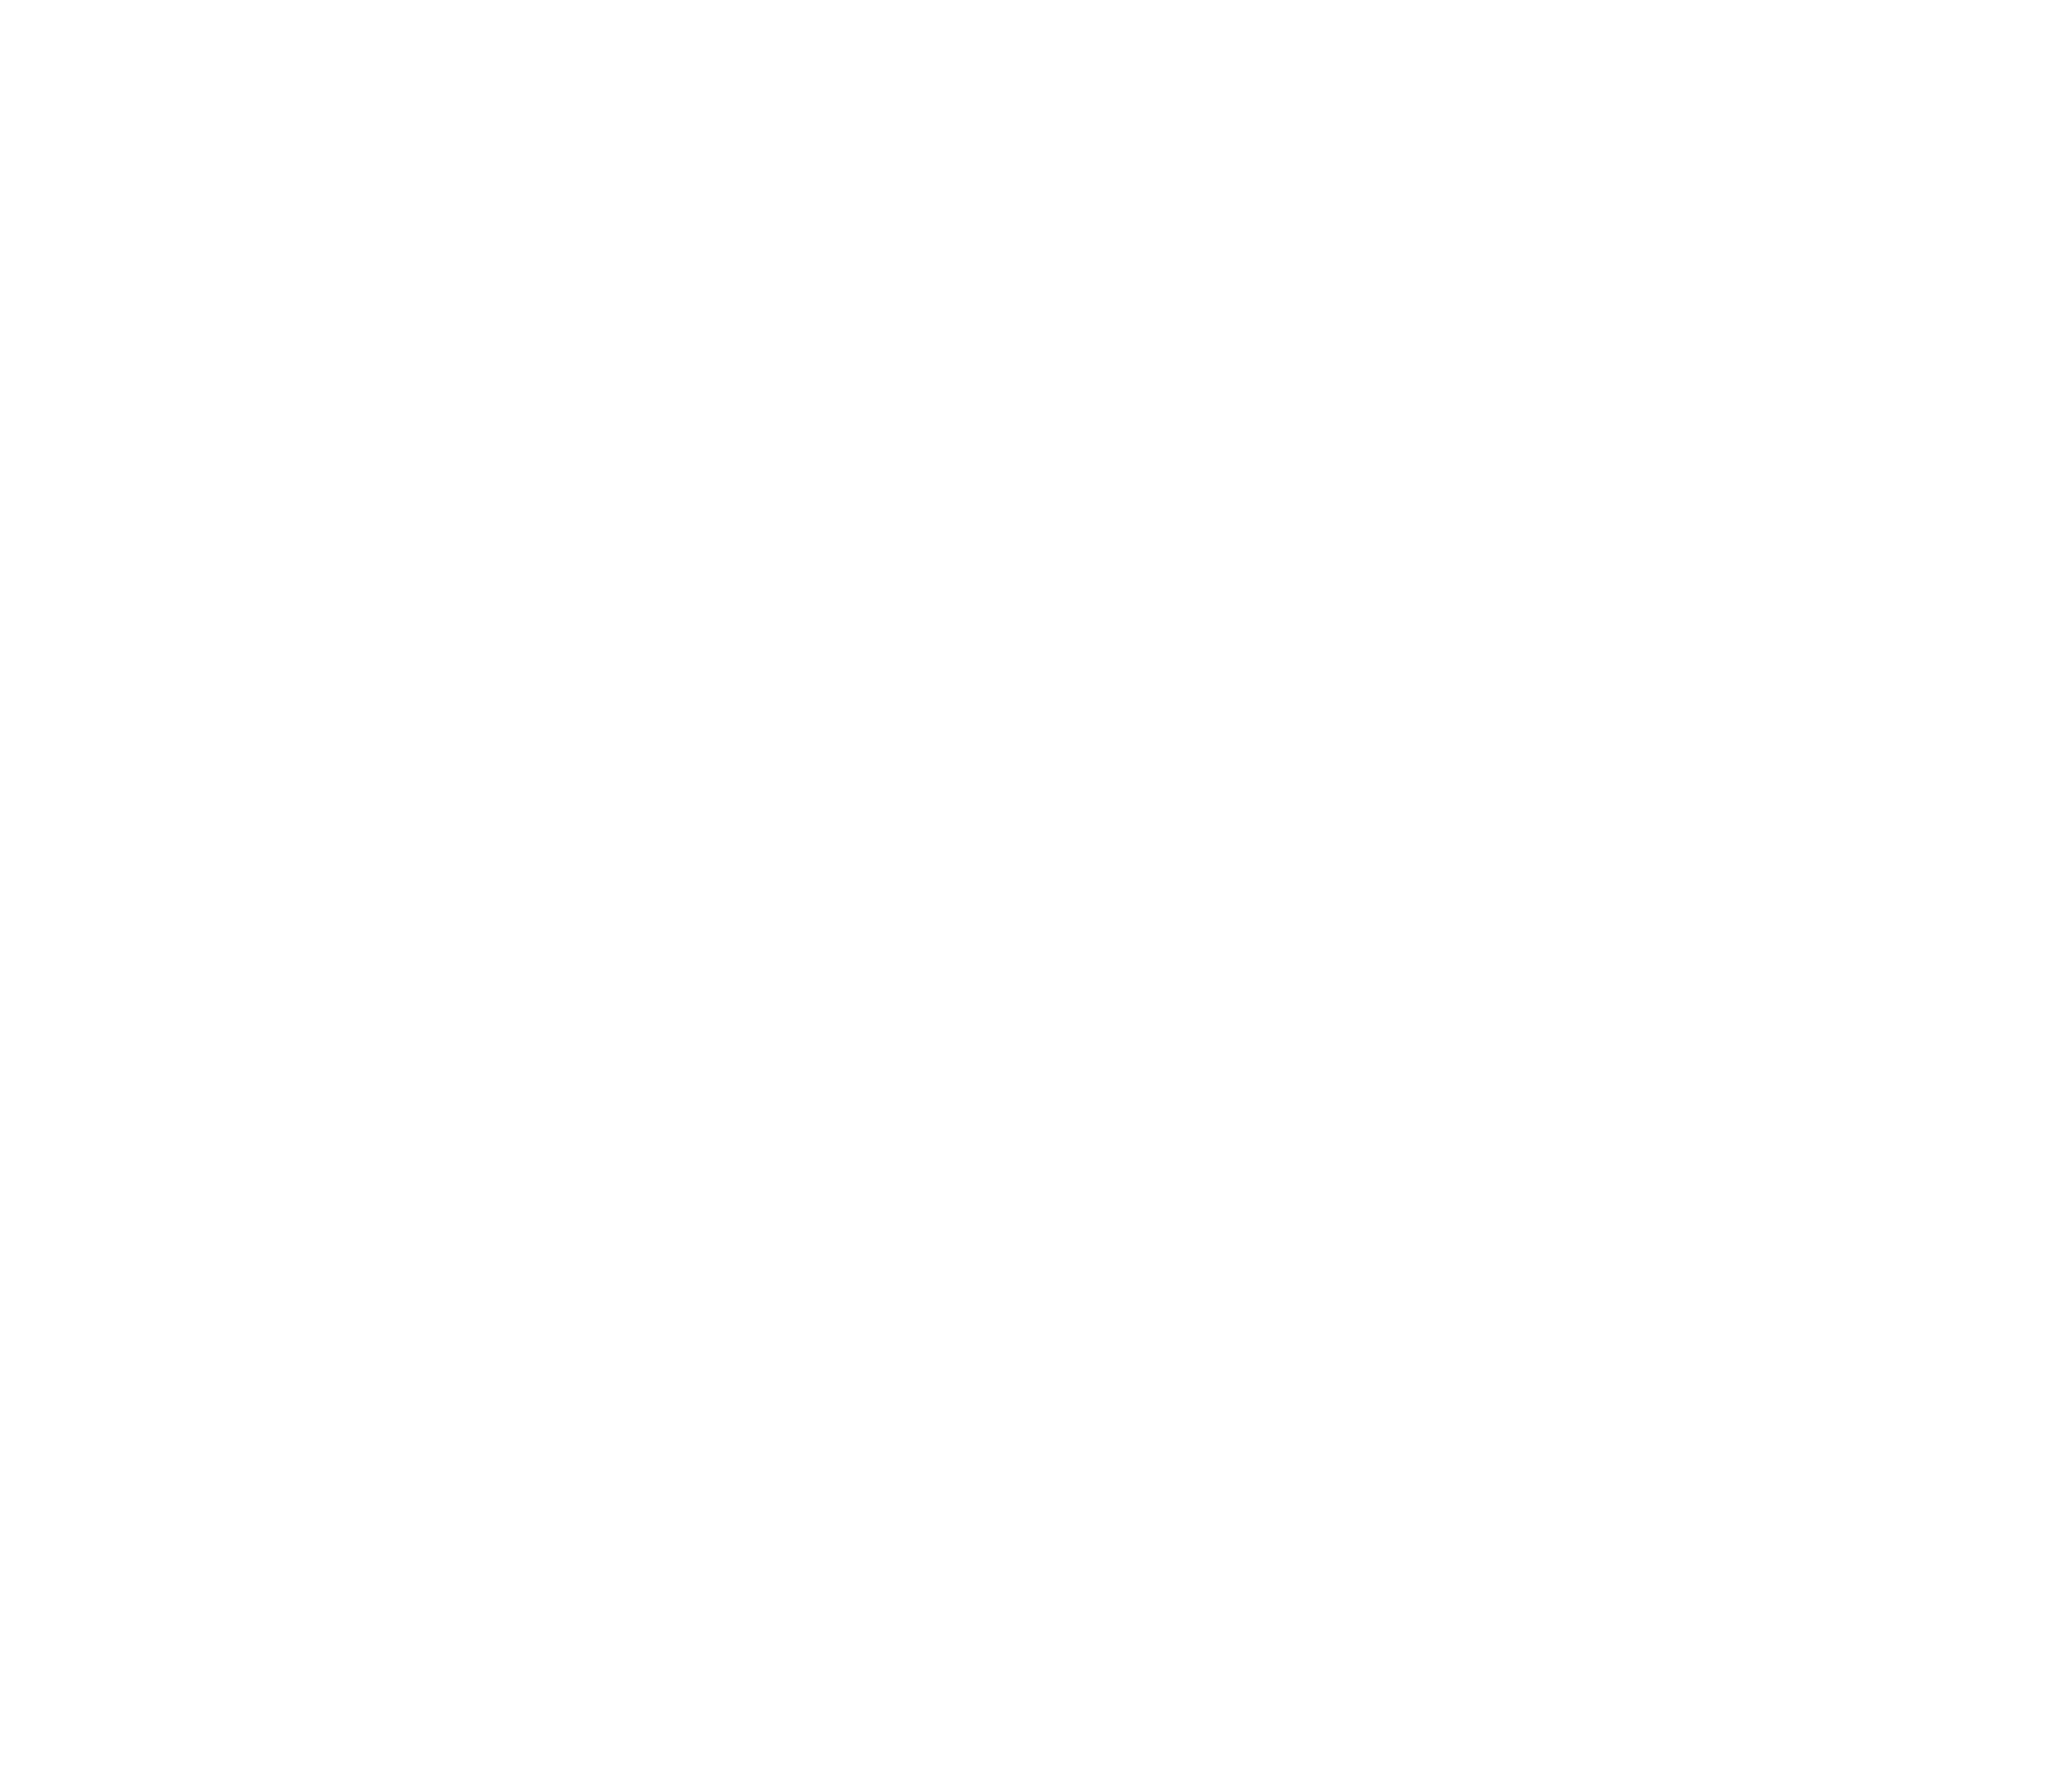 LA HABRA HEIGHTS FIRE